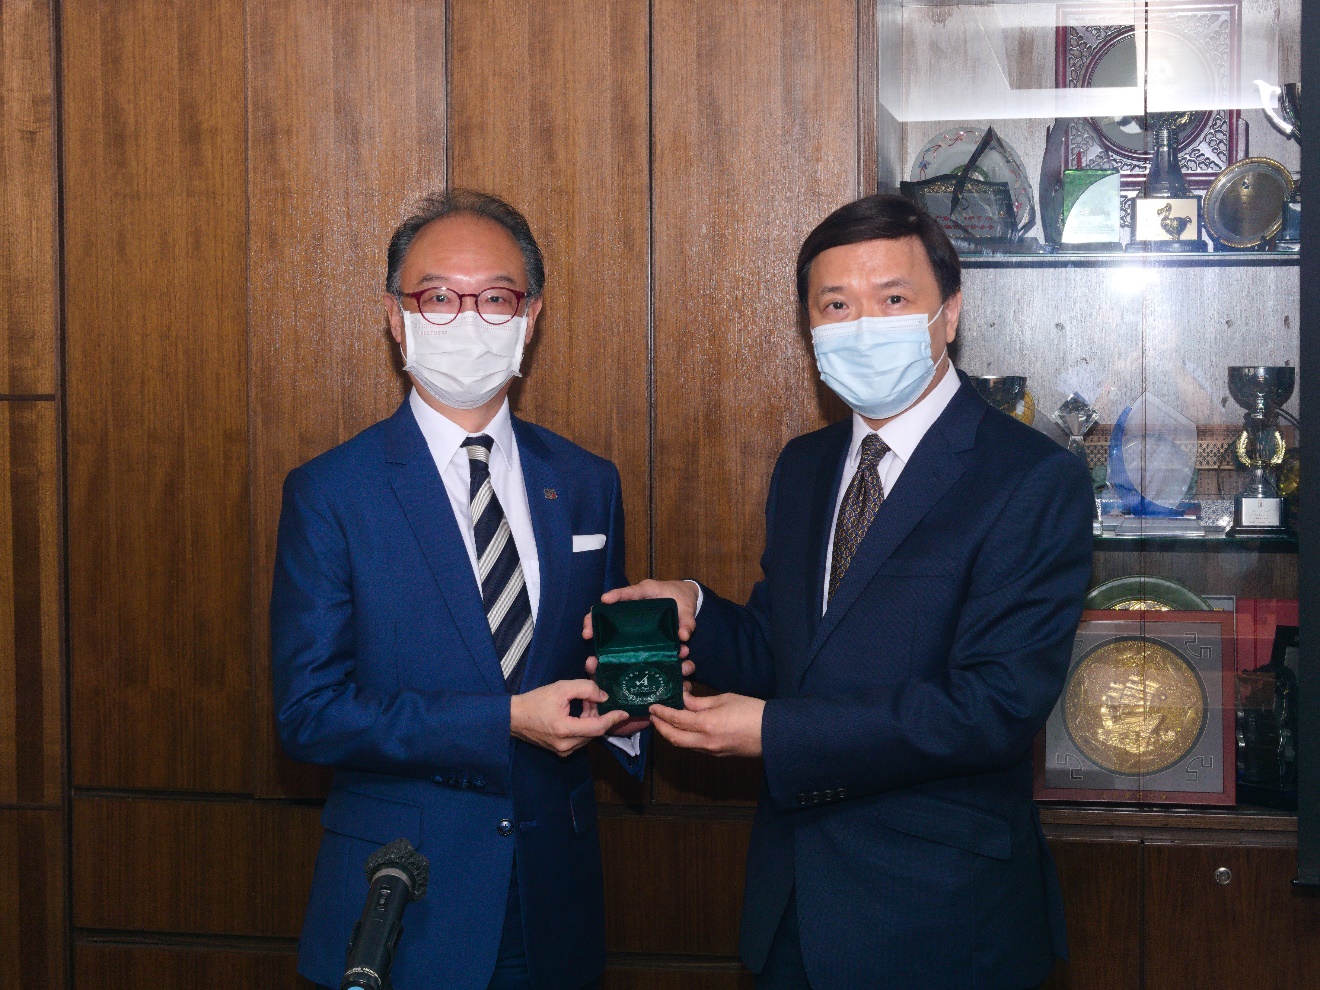 Director of Audit presenting a souvenir to HKICPA President Mr Johnson Kong (left)
